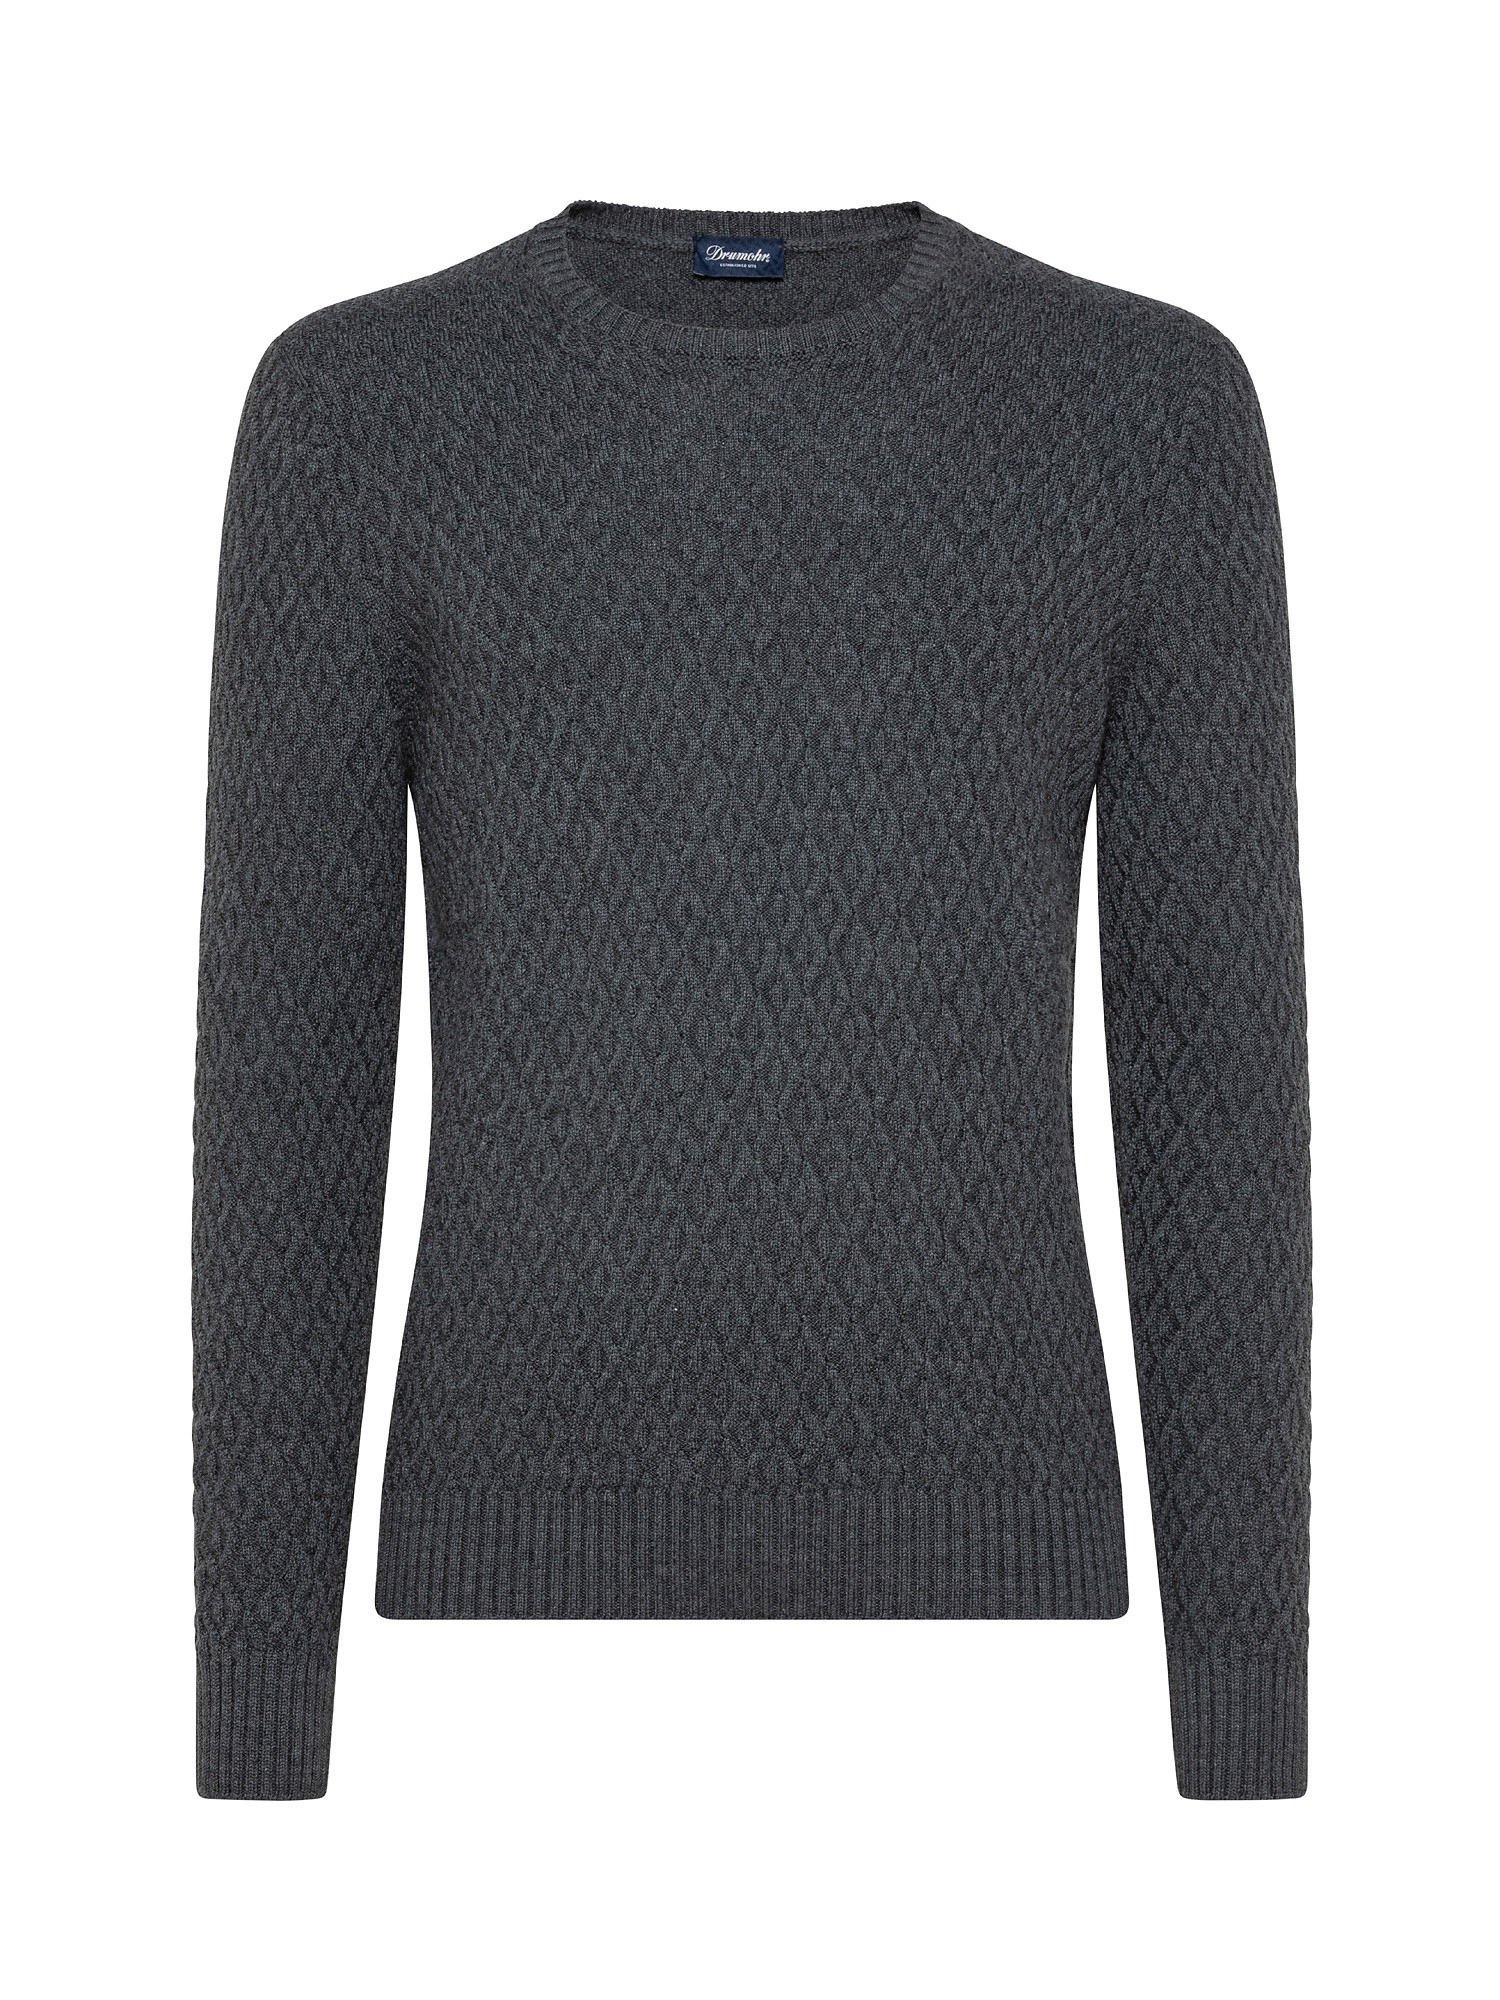 Long sleeve crewneck sweater, Grey, large image number 0